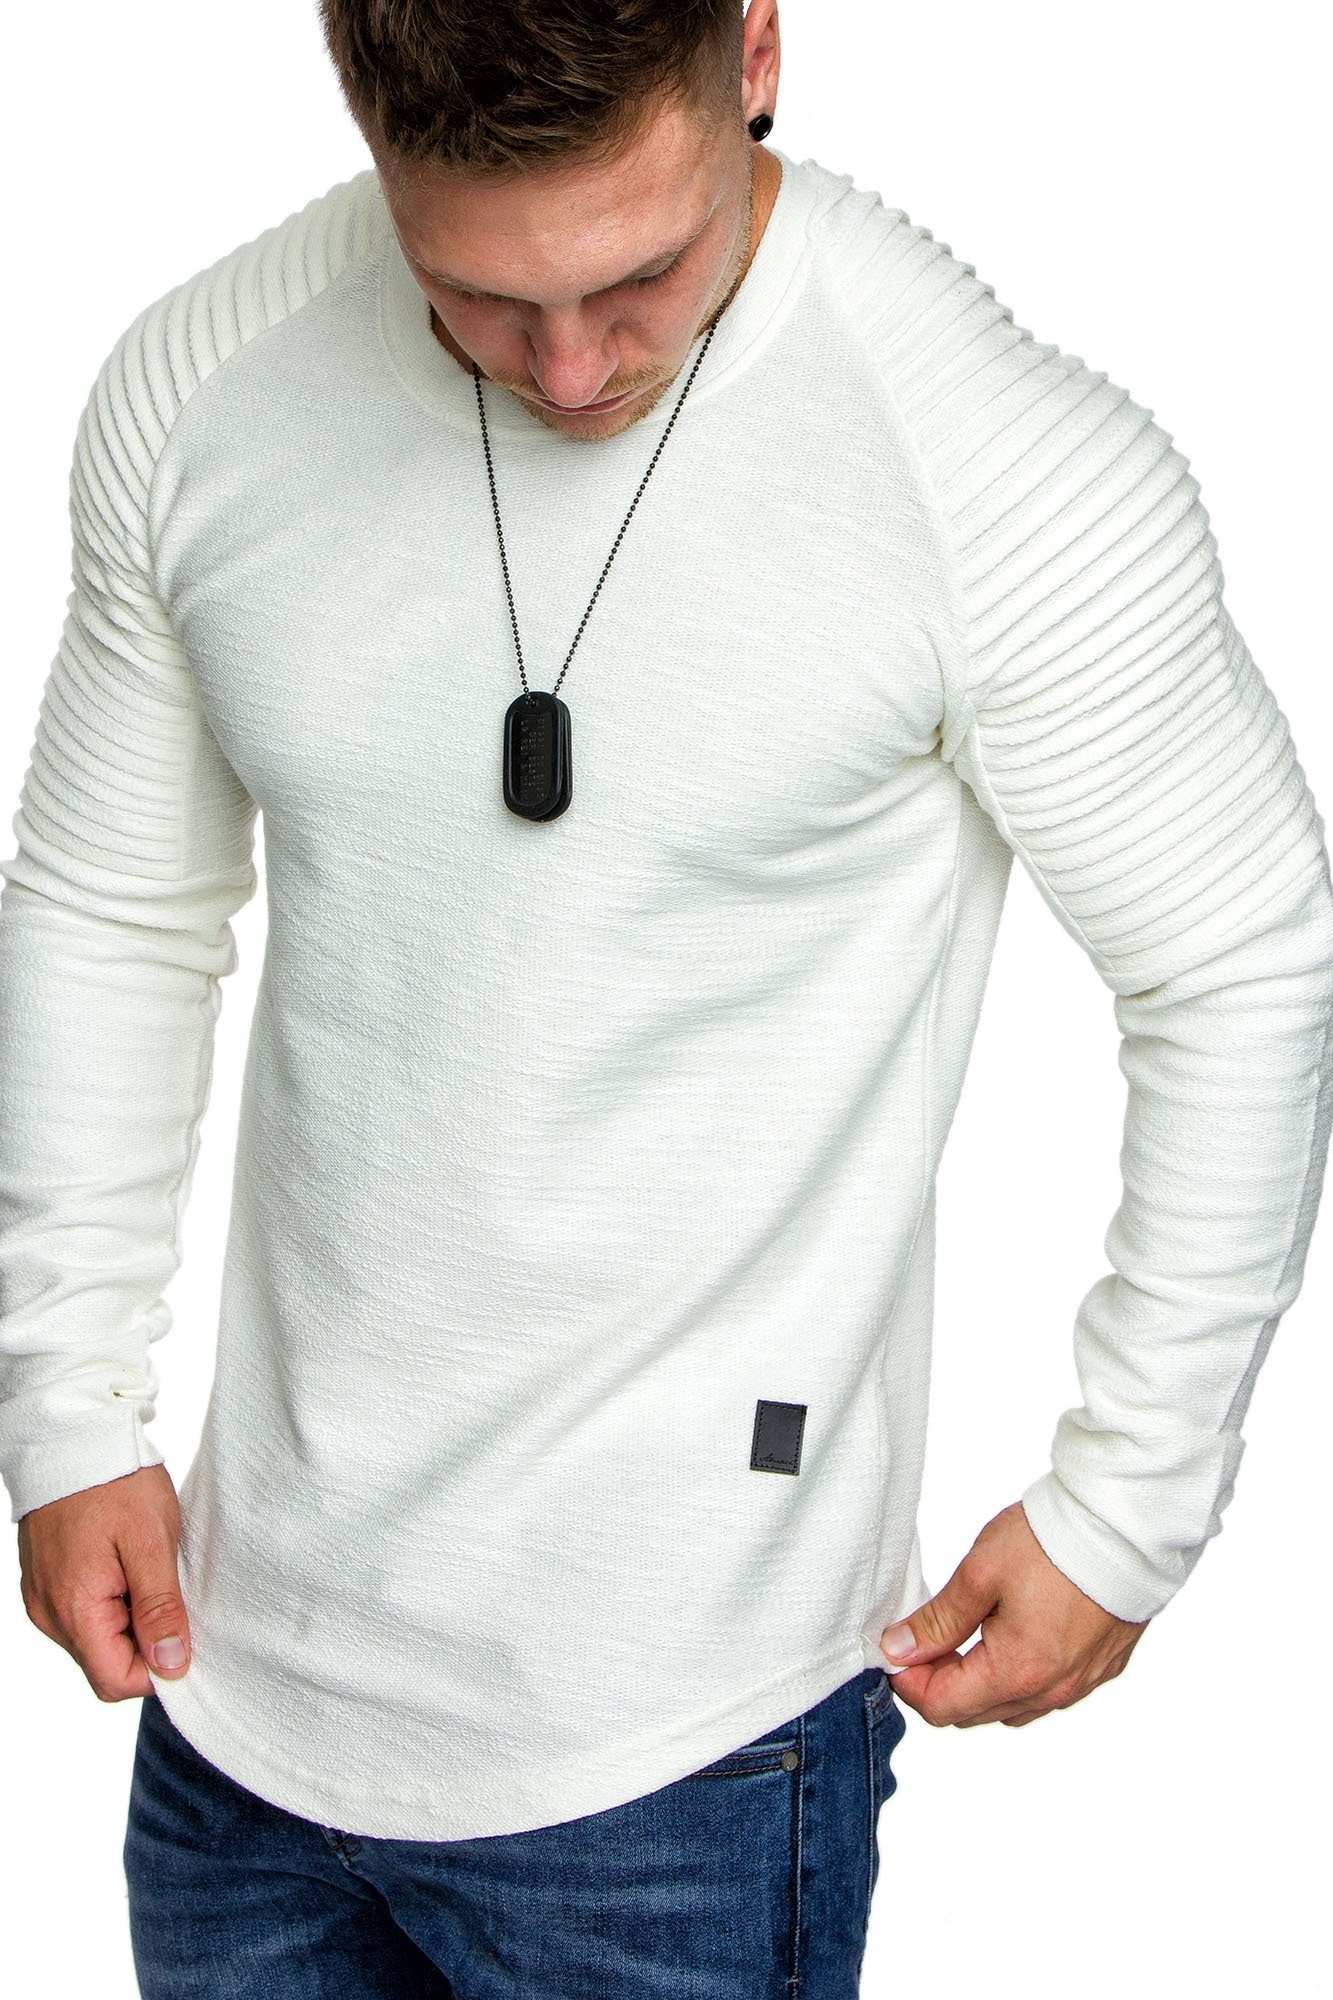 Amaci&Sons Sweatshirt Gresham Sweatshirt Herren Basic Kontrast Sweatjacke Pullover Hoodie Kapuzenpullover Weiß | Sweatshirts